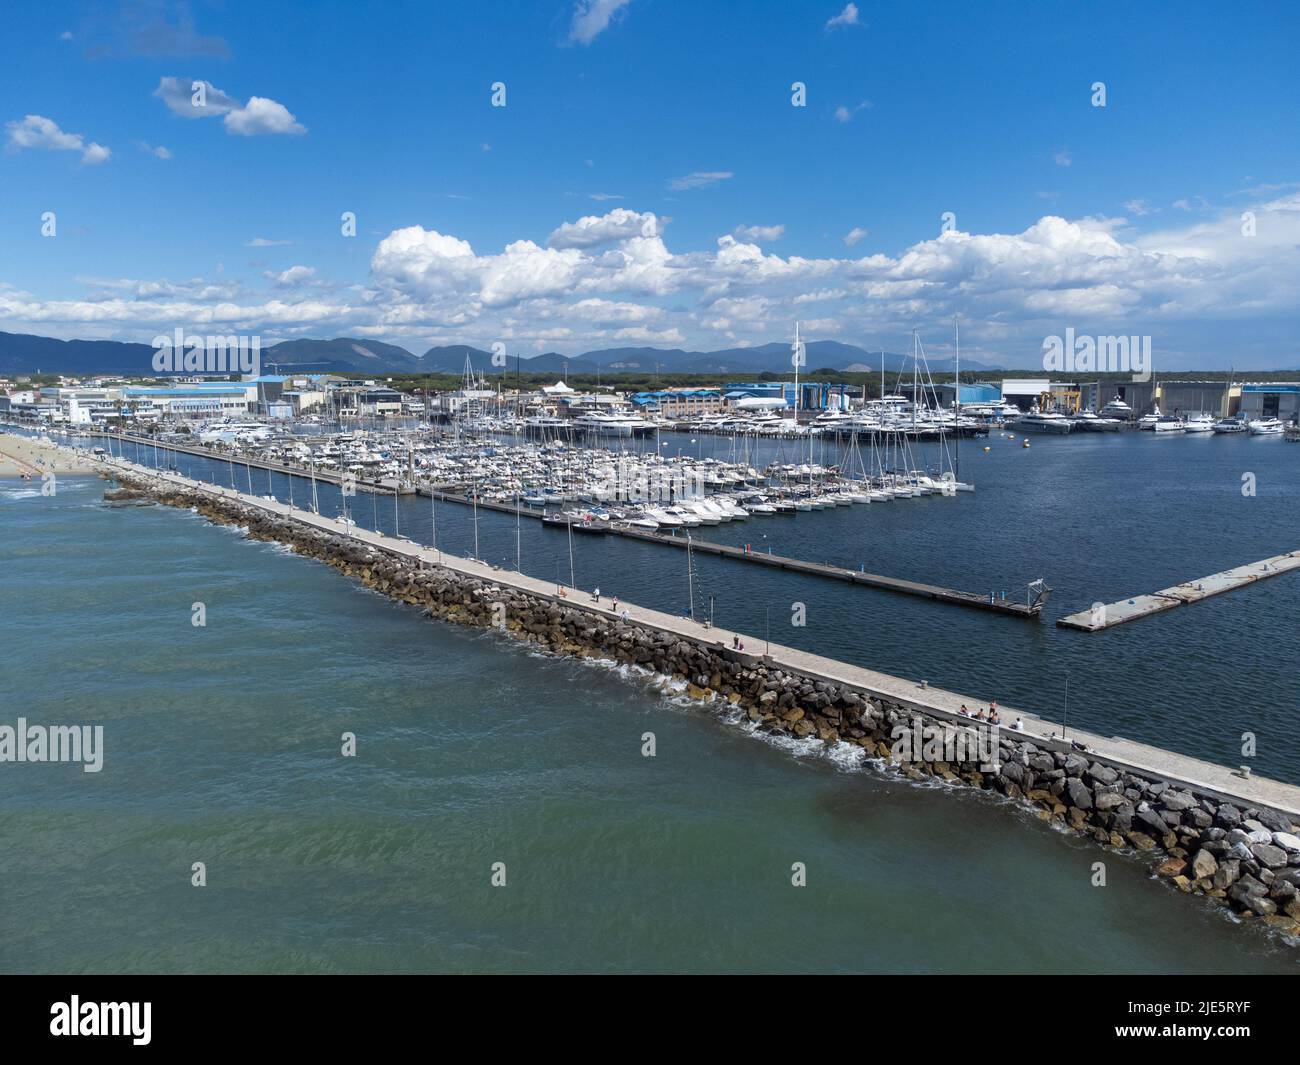 Drone view of pier and marina at Viareggio, Italy. Stock Photo